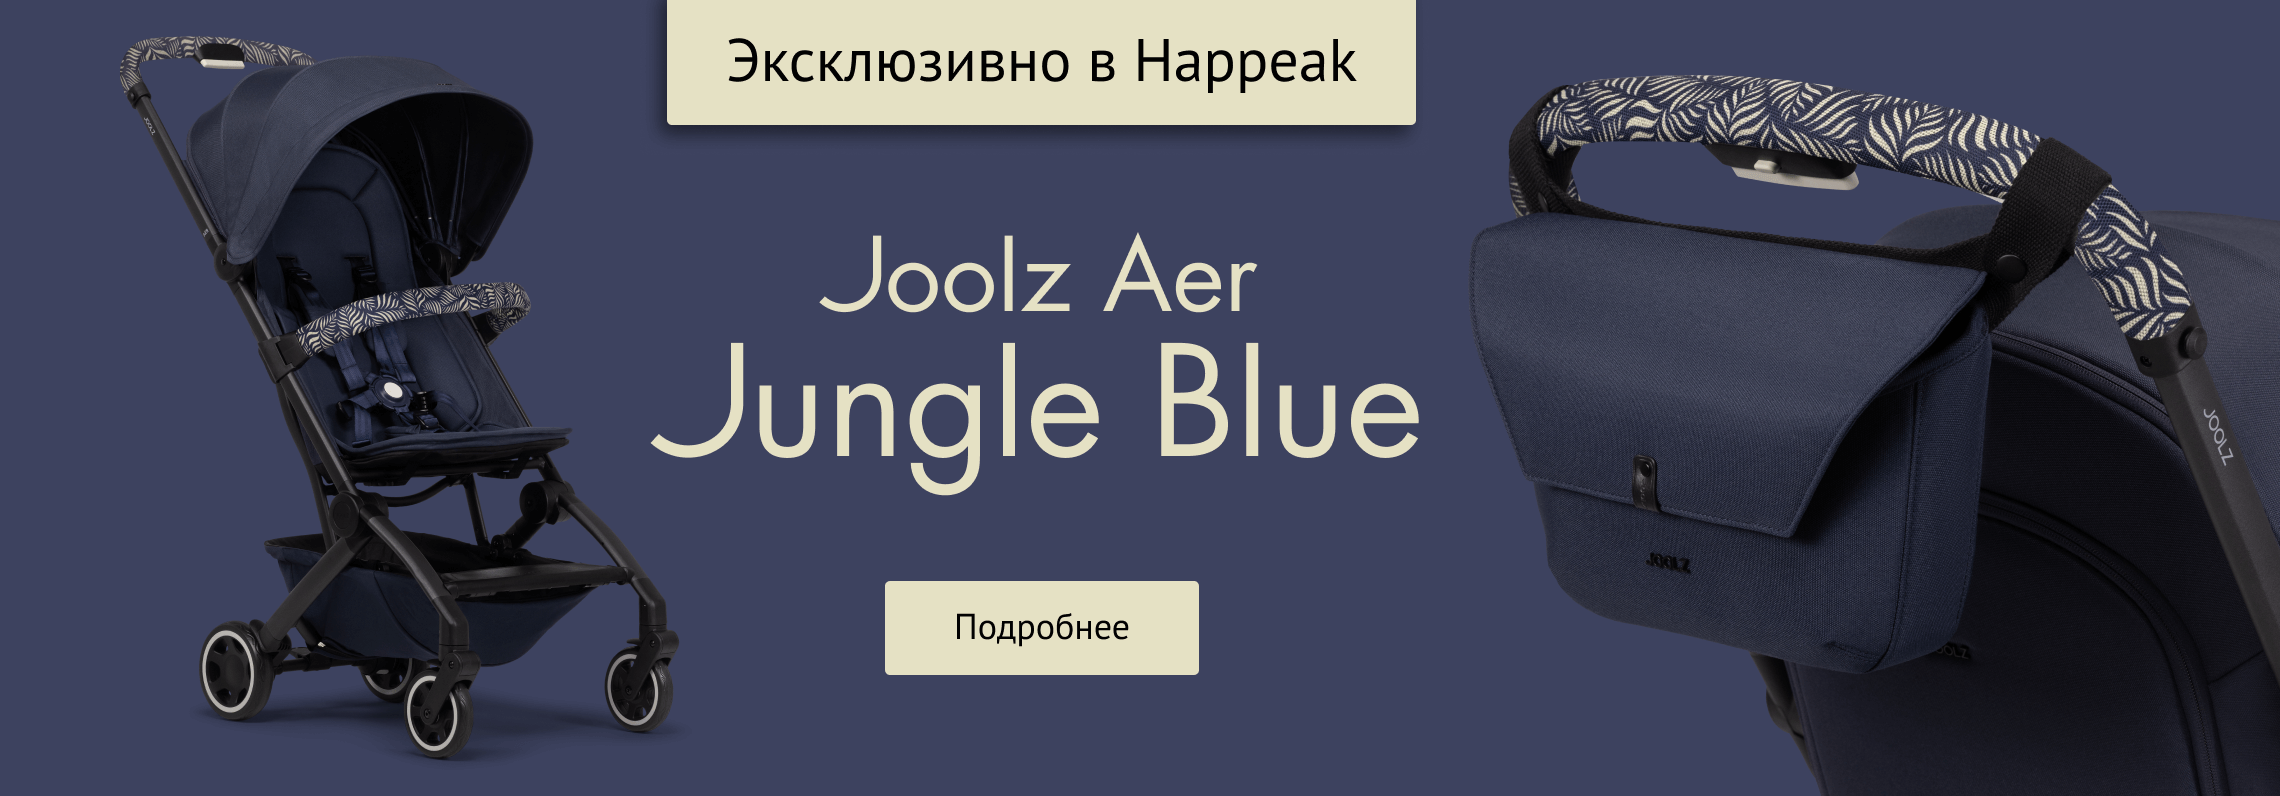 Новинка - Joolz Aer Jungle Blue